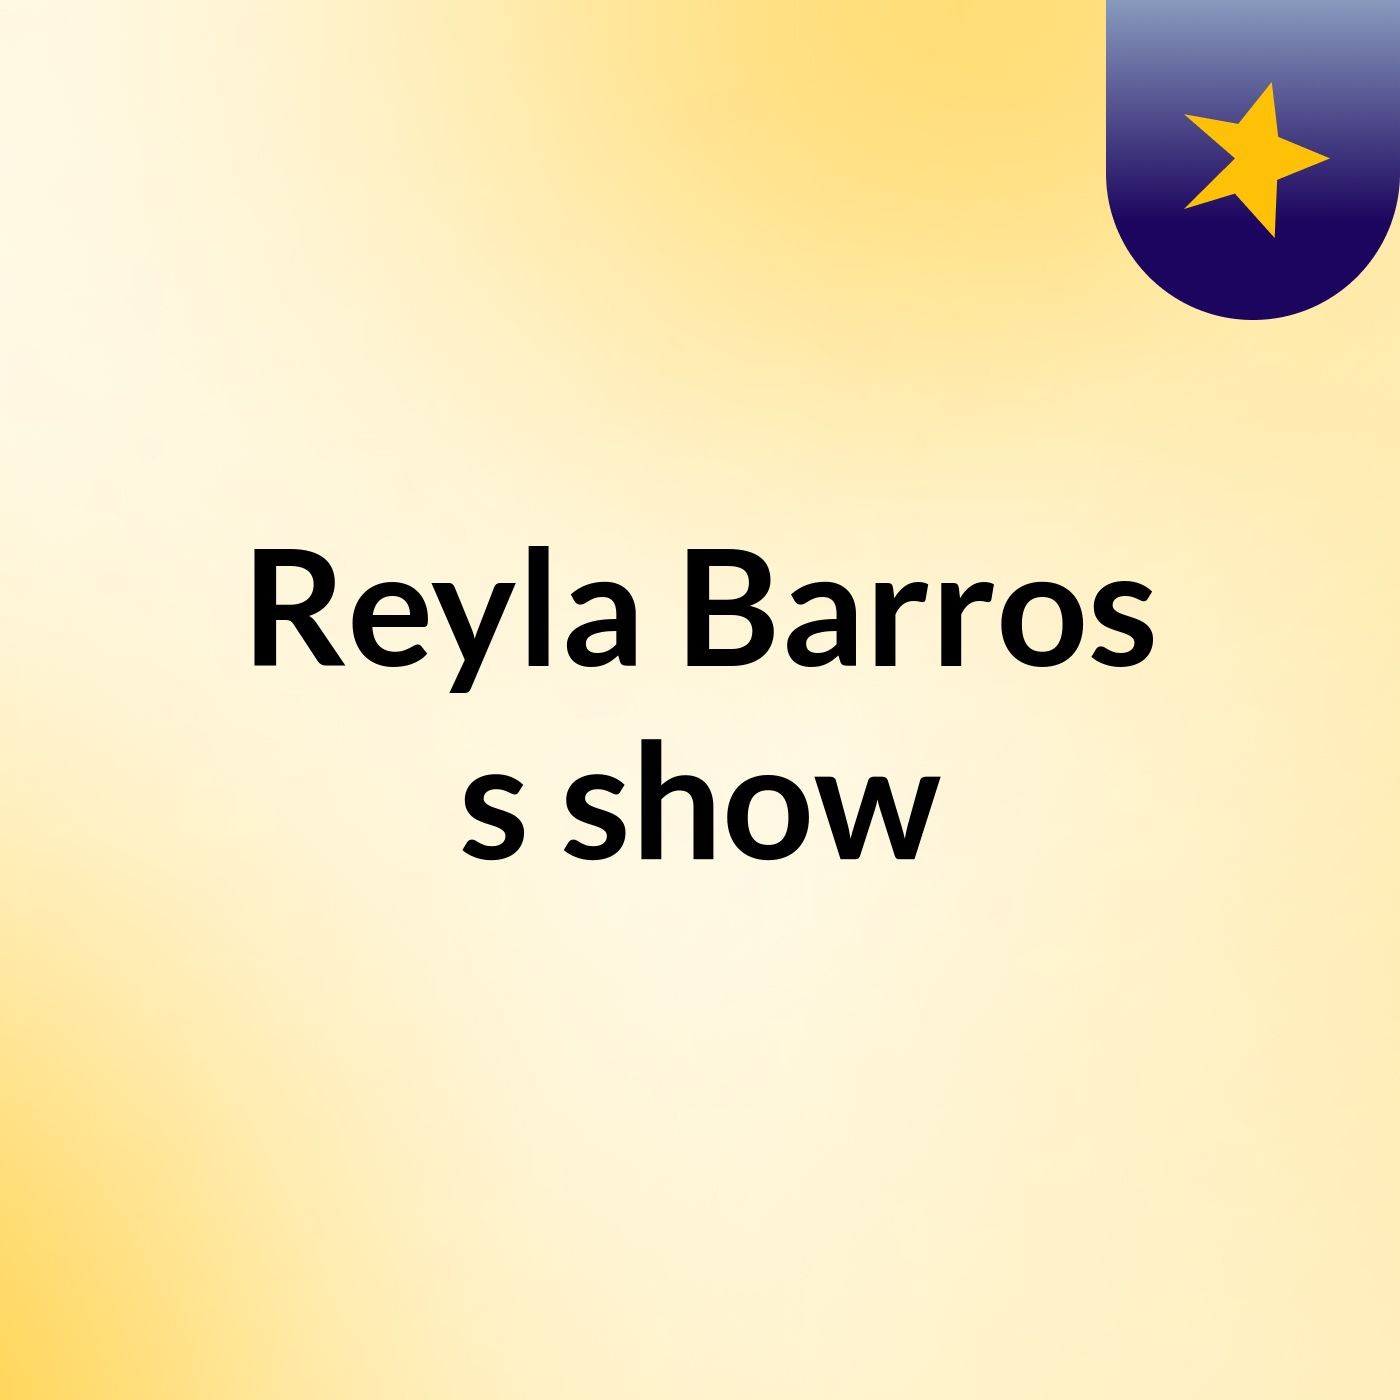 Reyla Barros's show